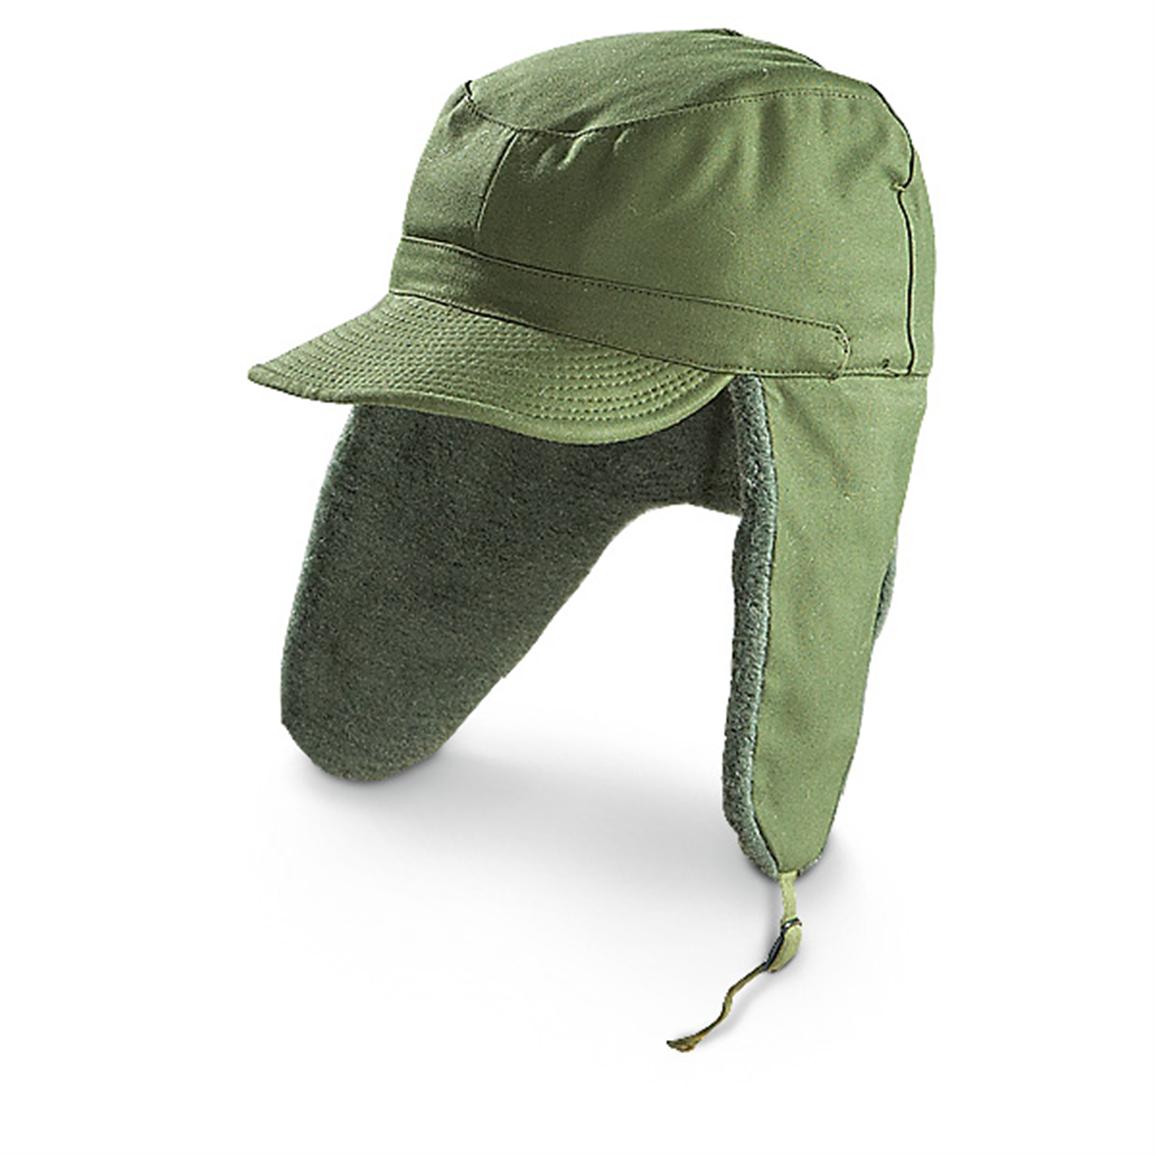 New Swedish Military Winter Hat, Olive Drab